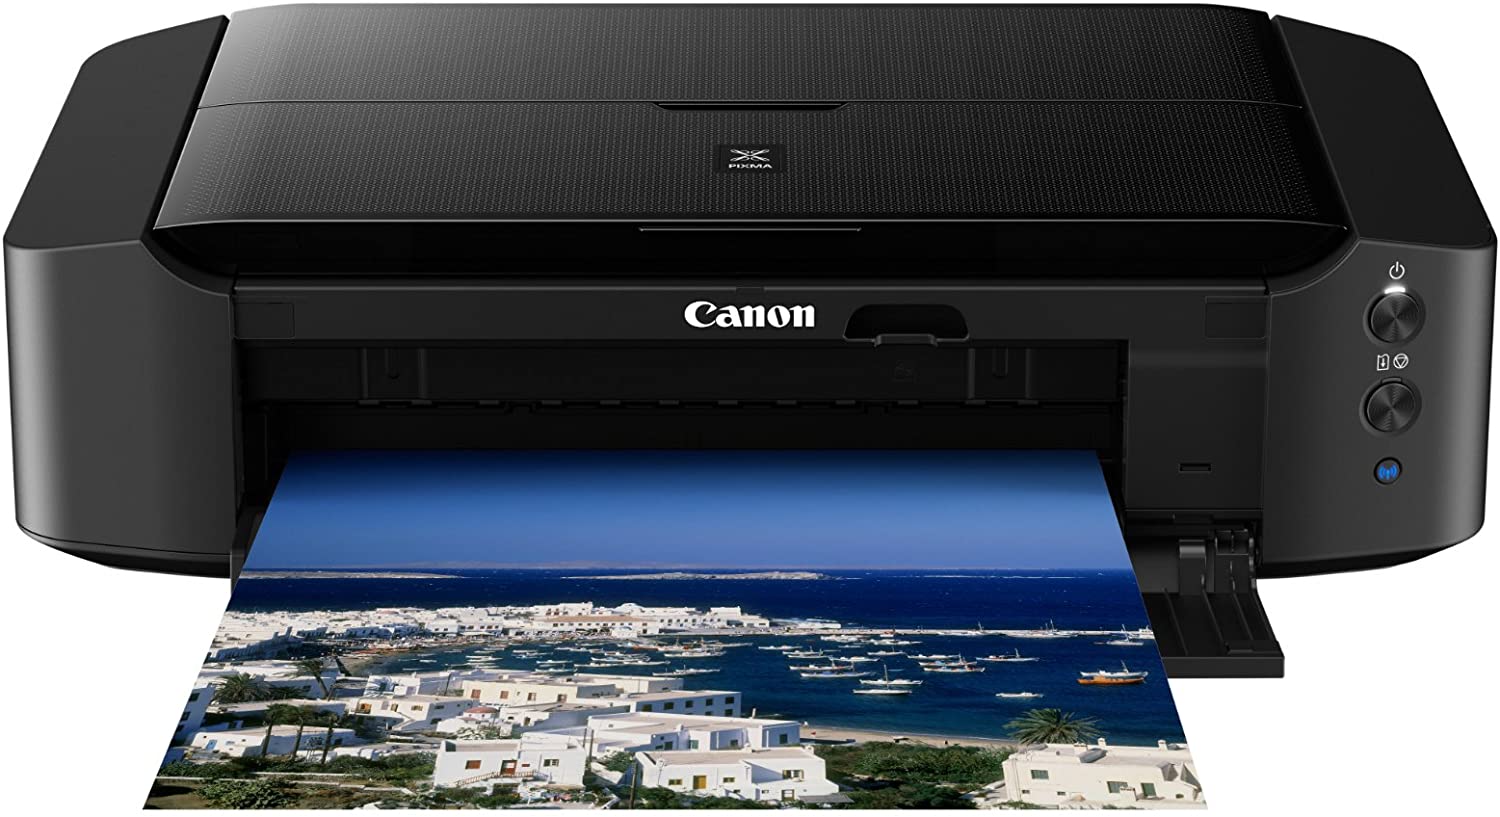 Product Image of Canon PIXMA iP8750 A3+ Wi-Fi Photo Printer,Black